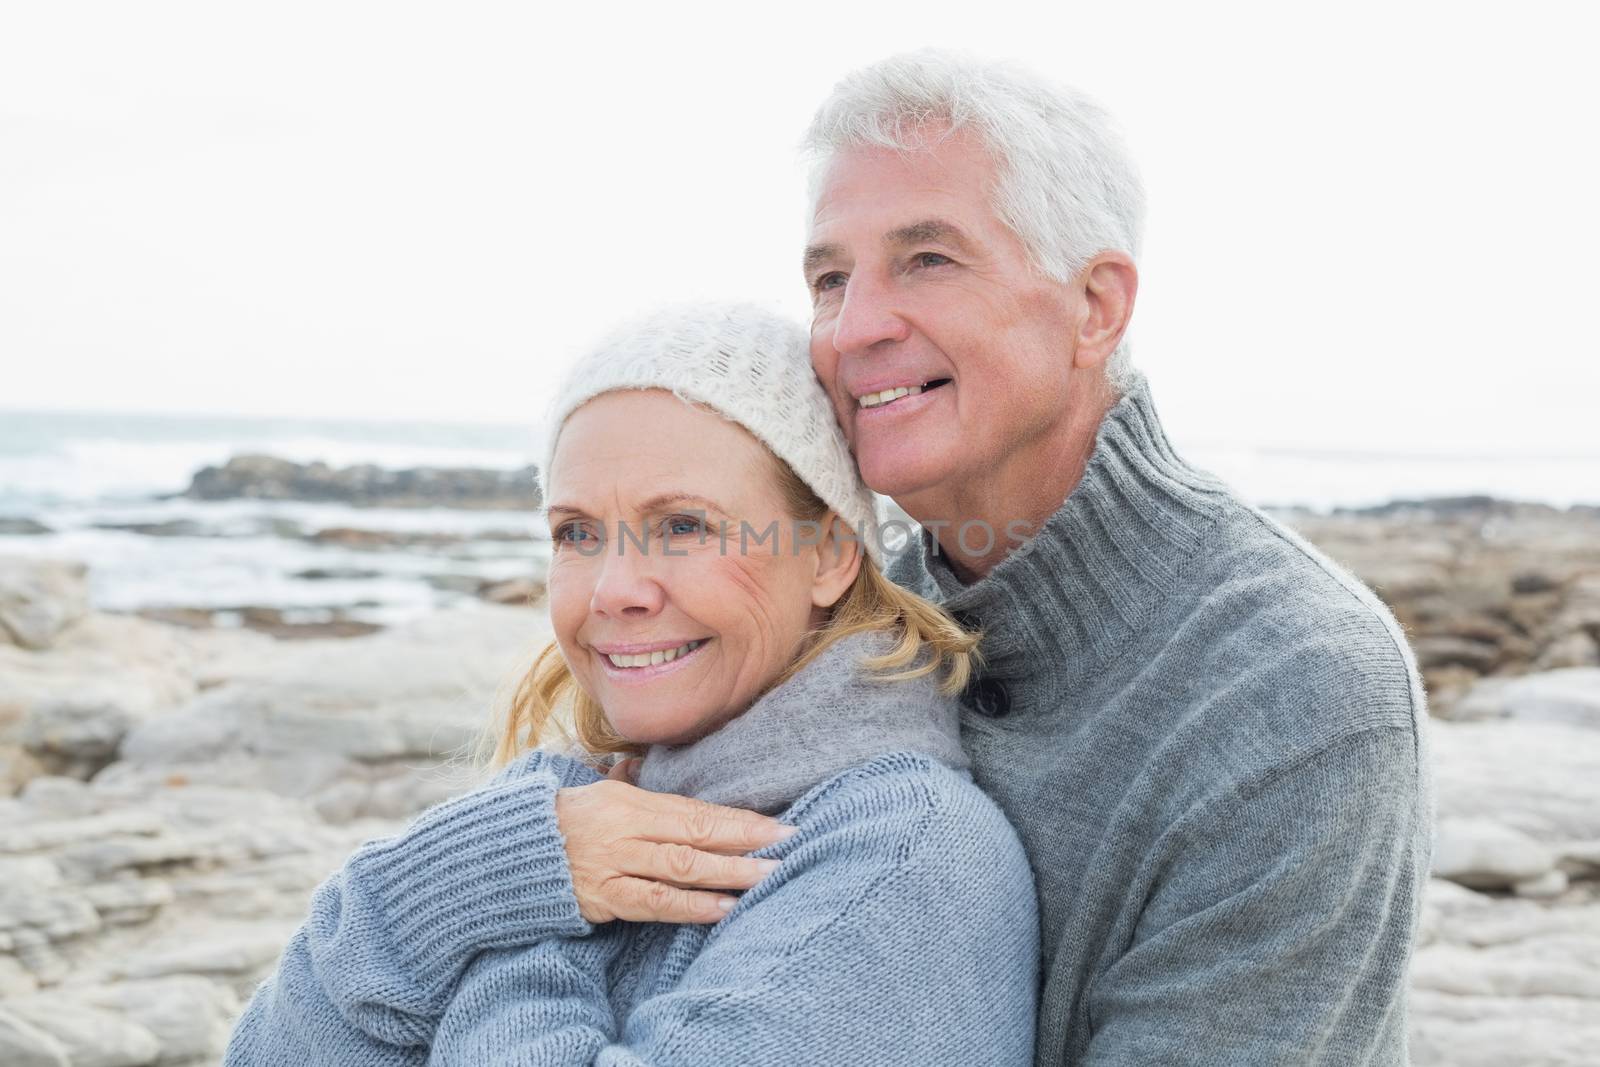 Closeup of a romantic senior couple together on a rocky beach